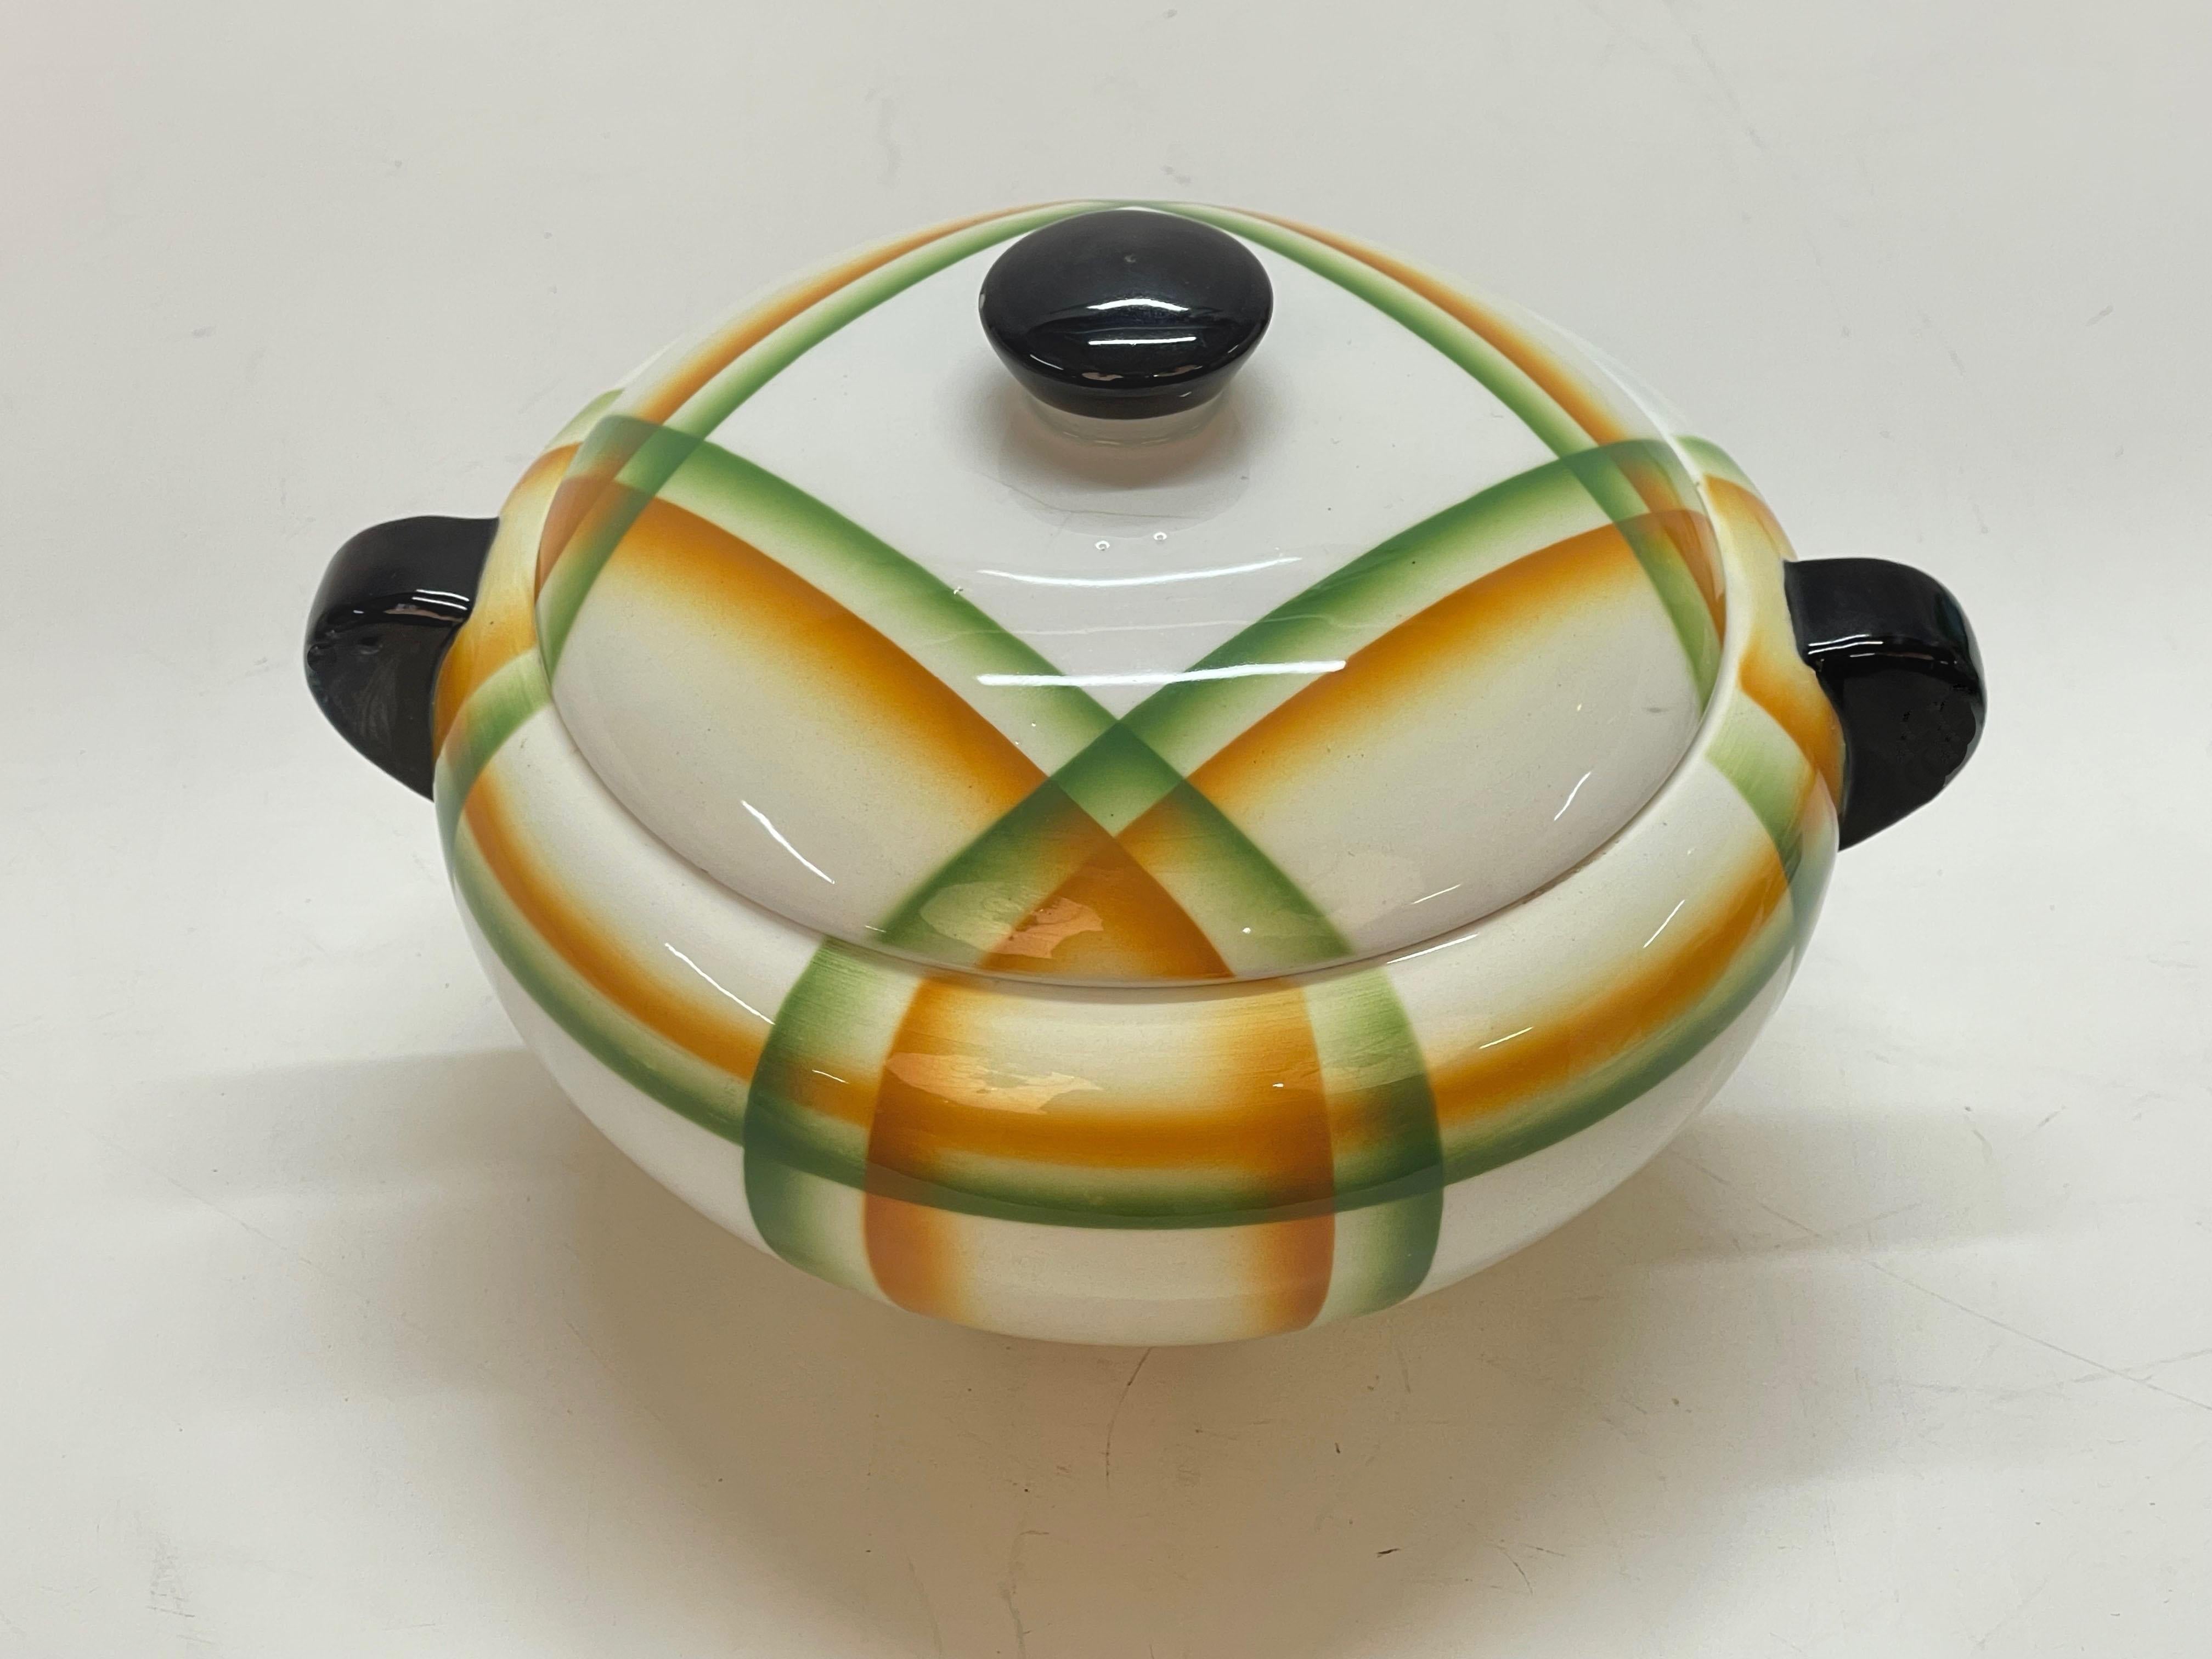 Simonetto Futuristic Airbrushed Ceramic Italian Centerpiece Soup Bowl, 1930s For Sale 2